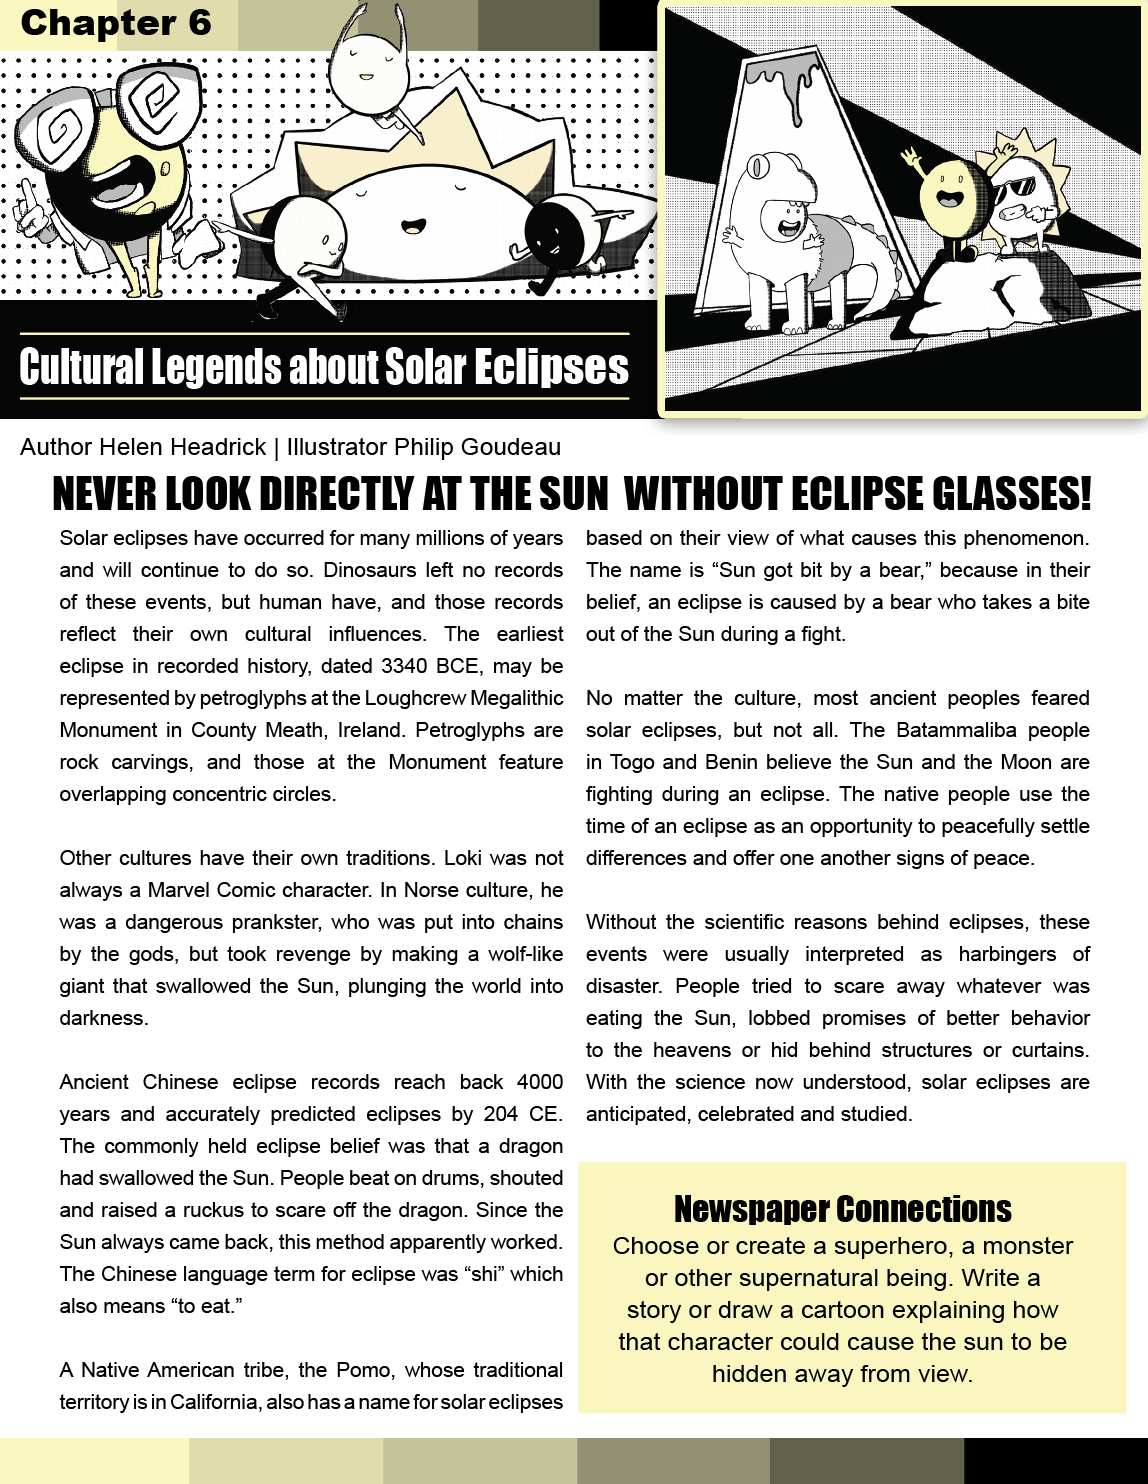 Chapter 6: Cultural Legends about Solar Eclipses